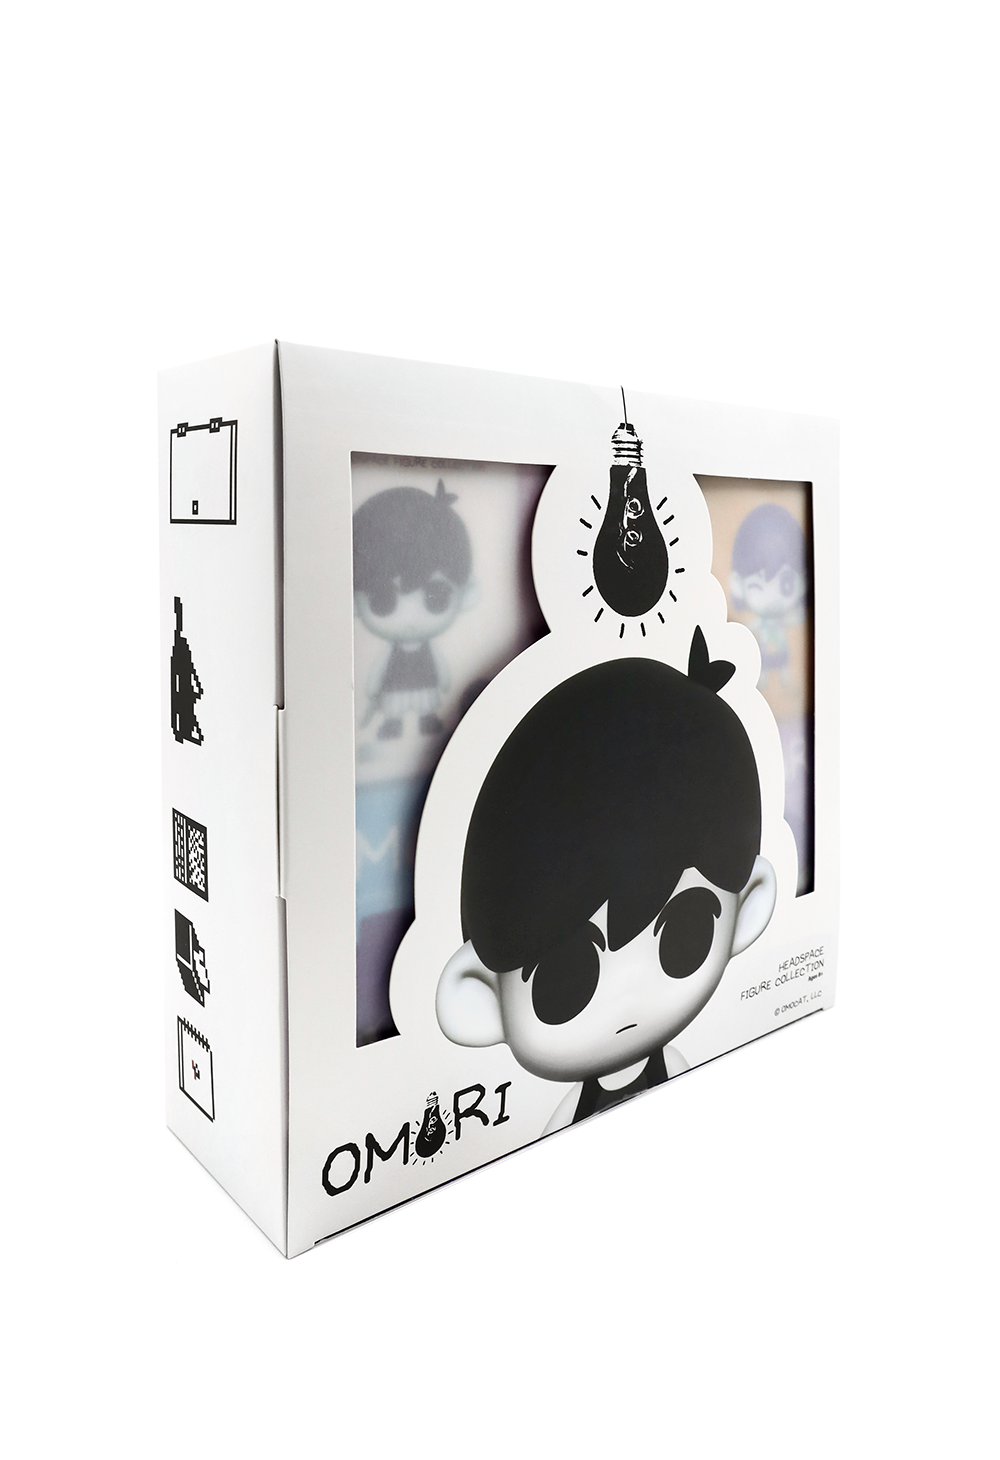 * IN HAND * Authentic / Genuine Official OMOCAT Omori Sunny Plush Brand New